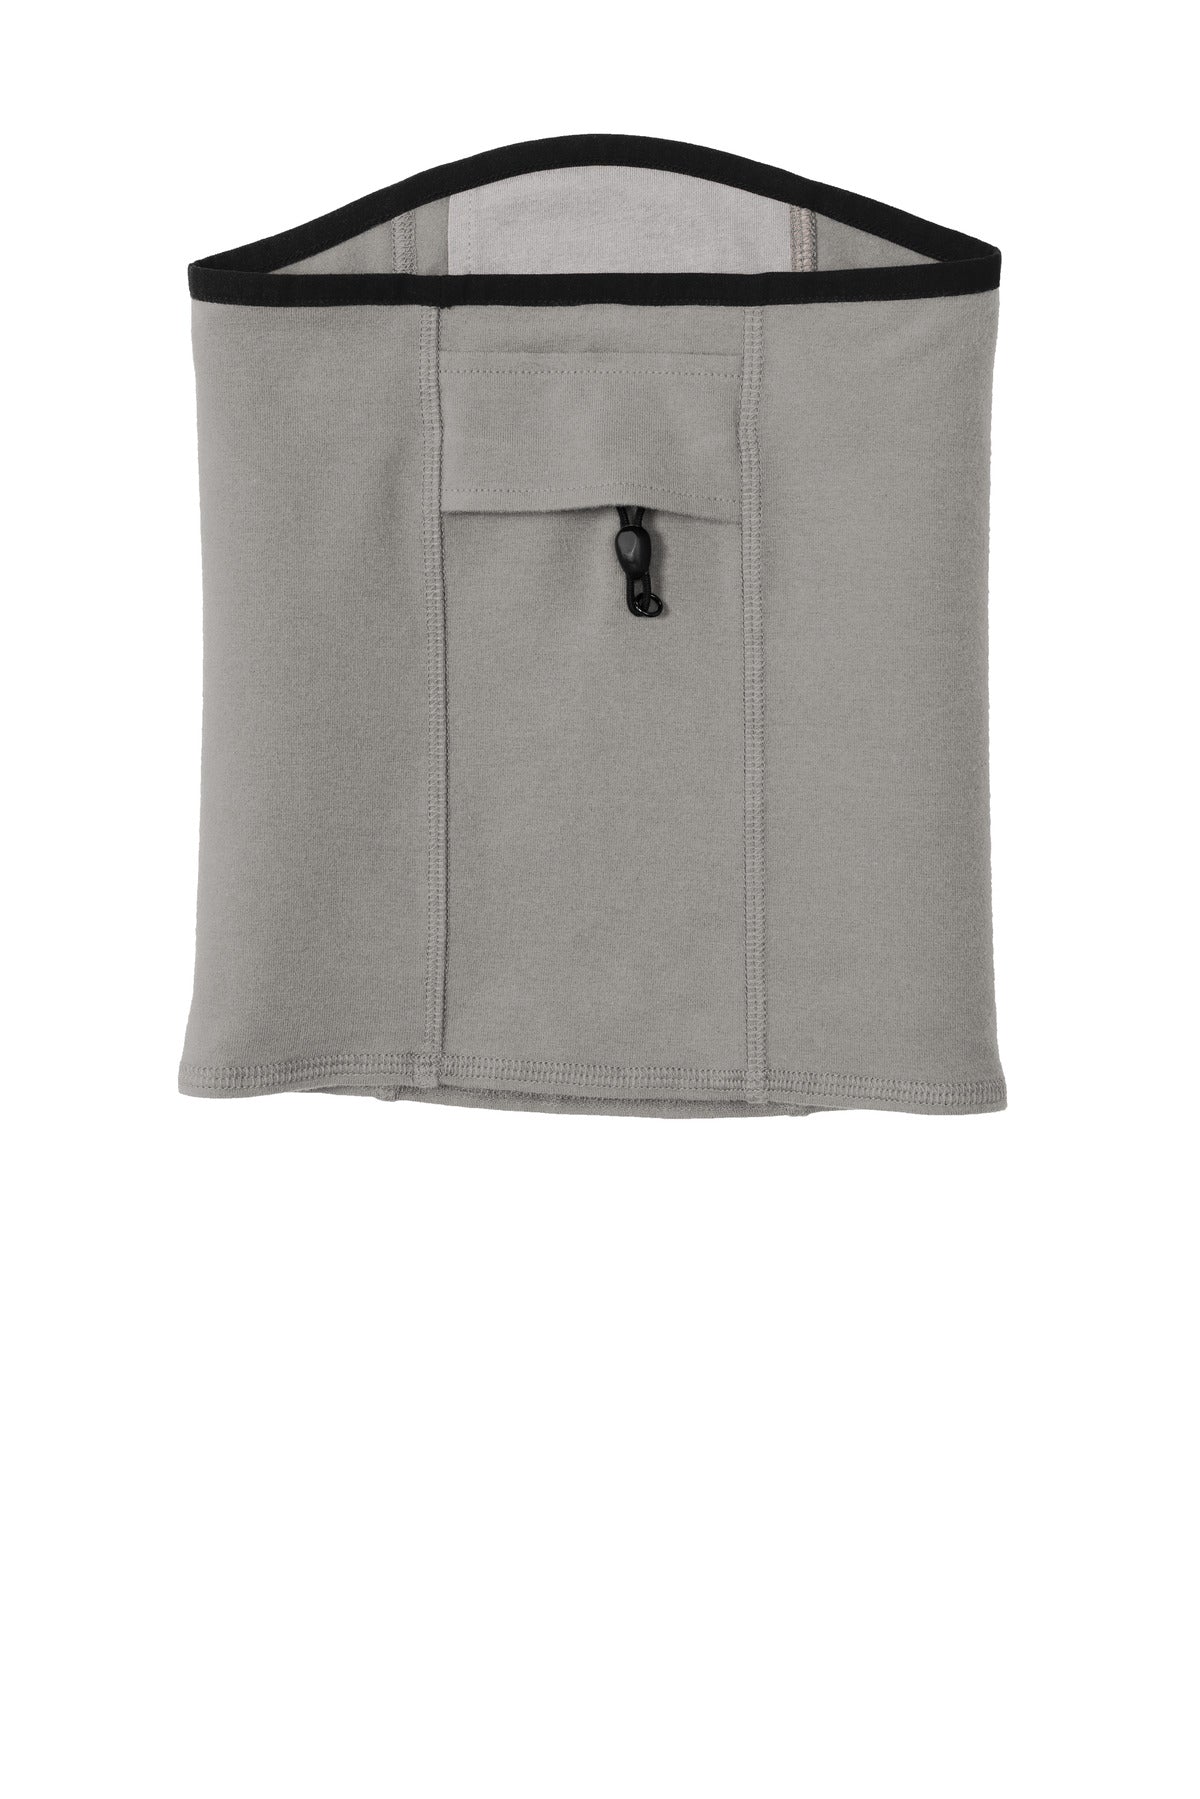 Carhartt  Cotton Blend Filter Pocket Gaiter CT105086